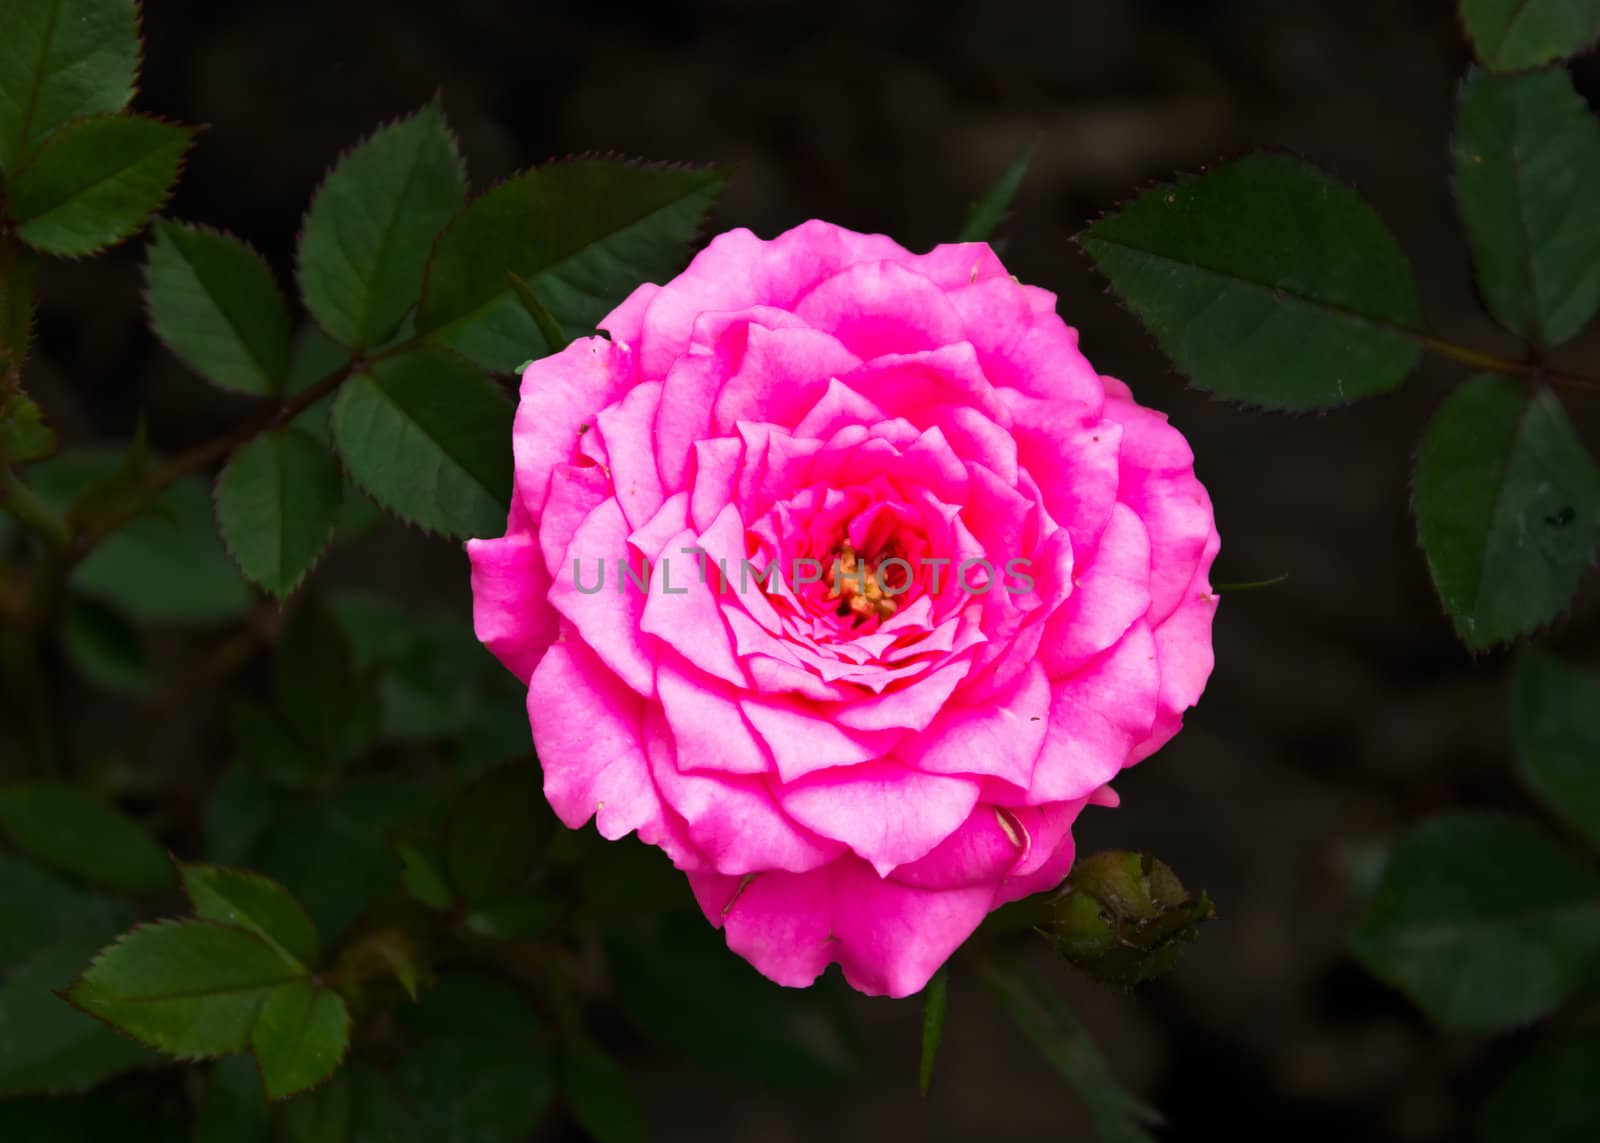 A beautiful pink rose in a garden